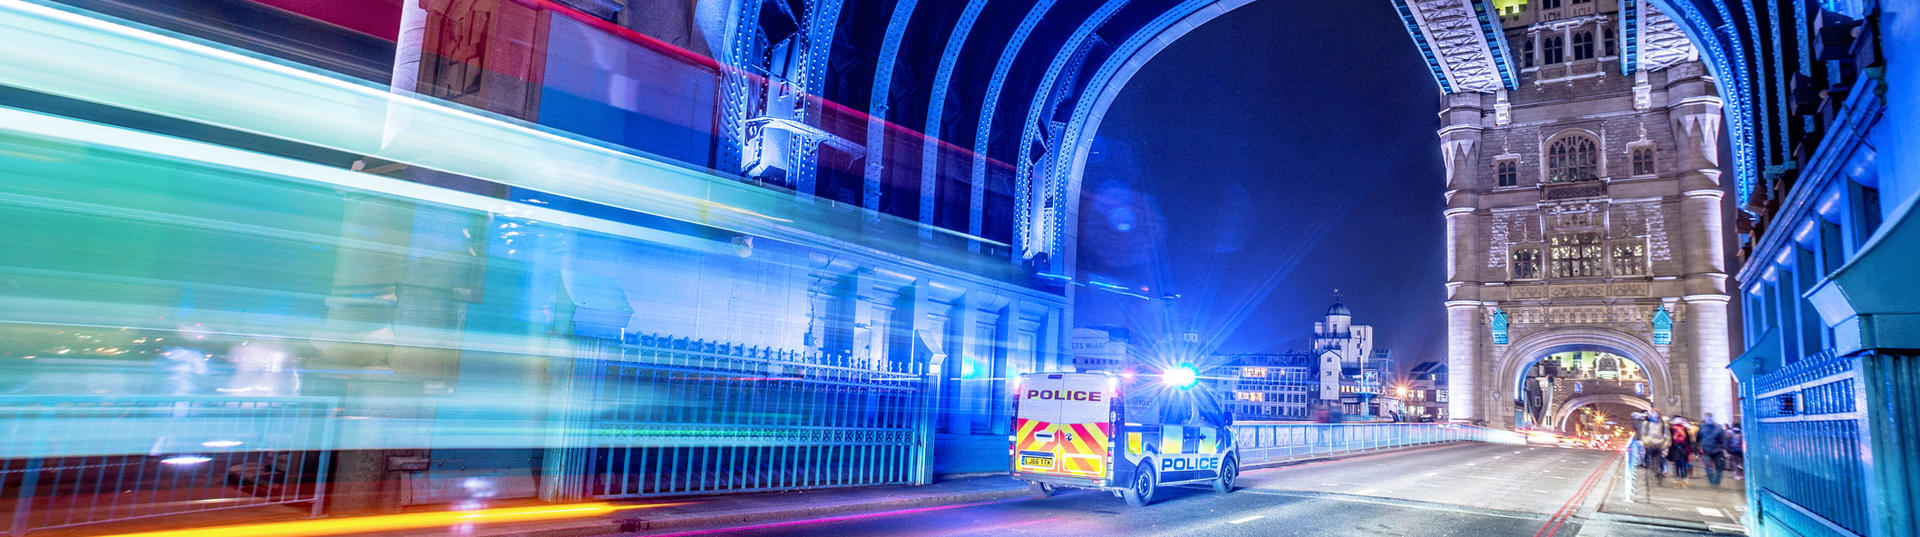 UK police van with lights on Tower Bridge